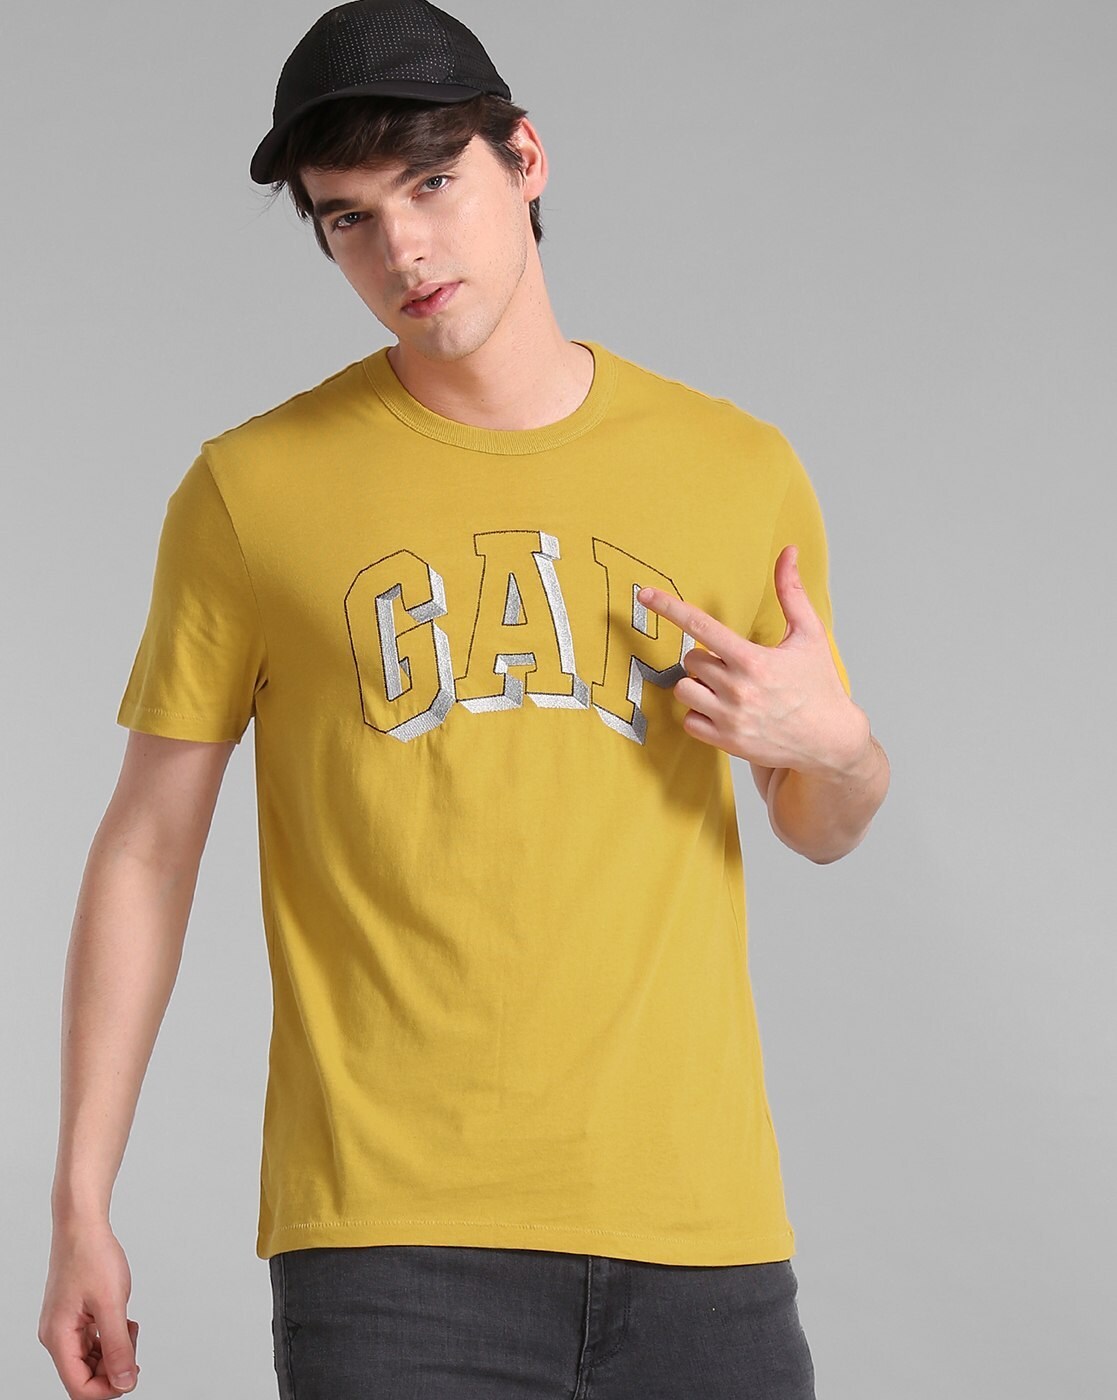 gap yellow shirt